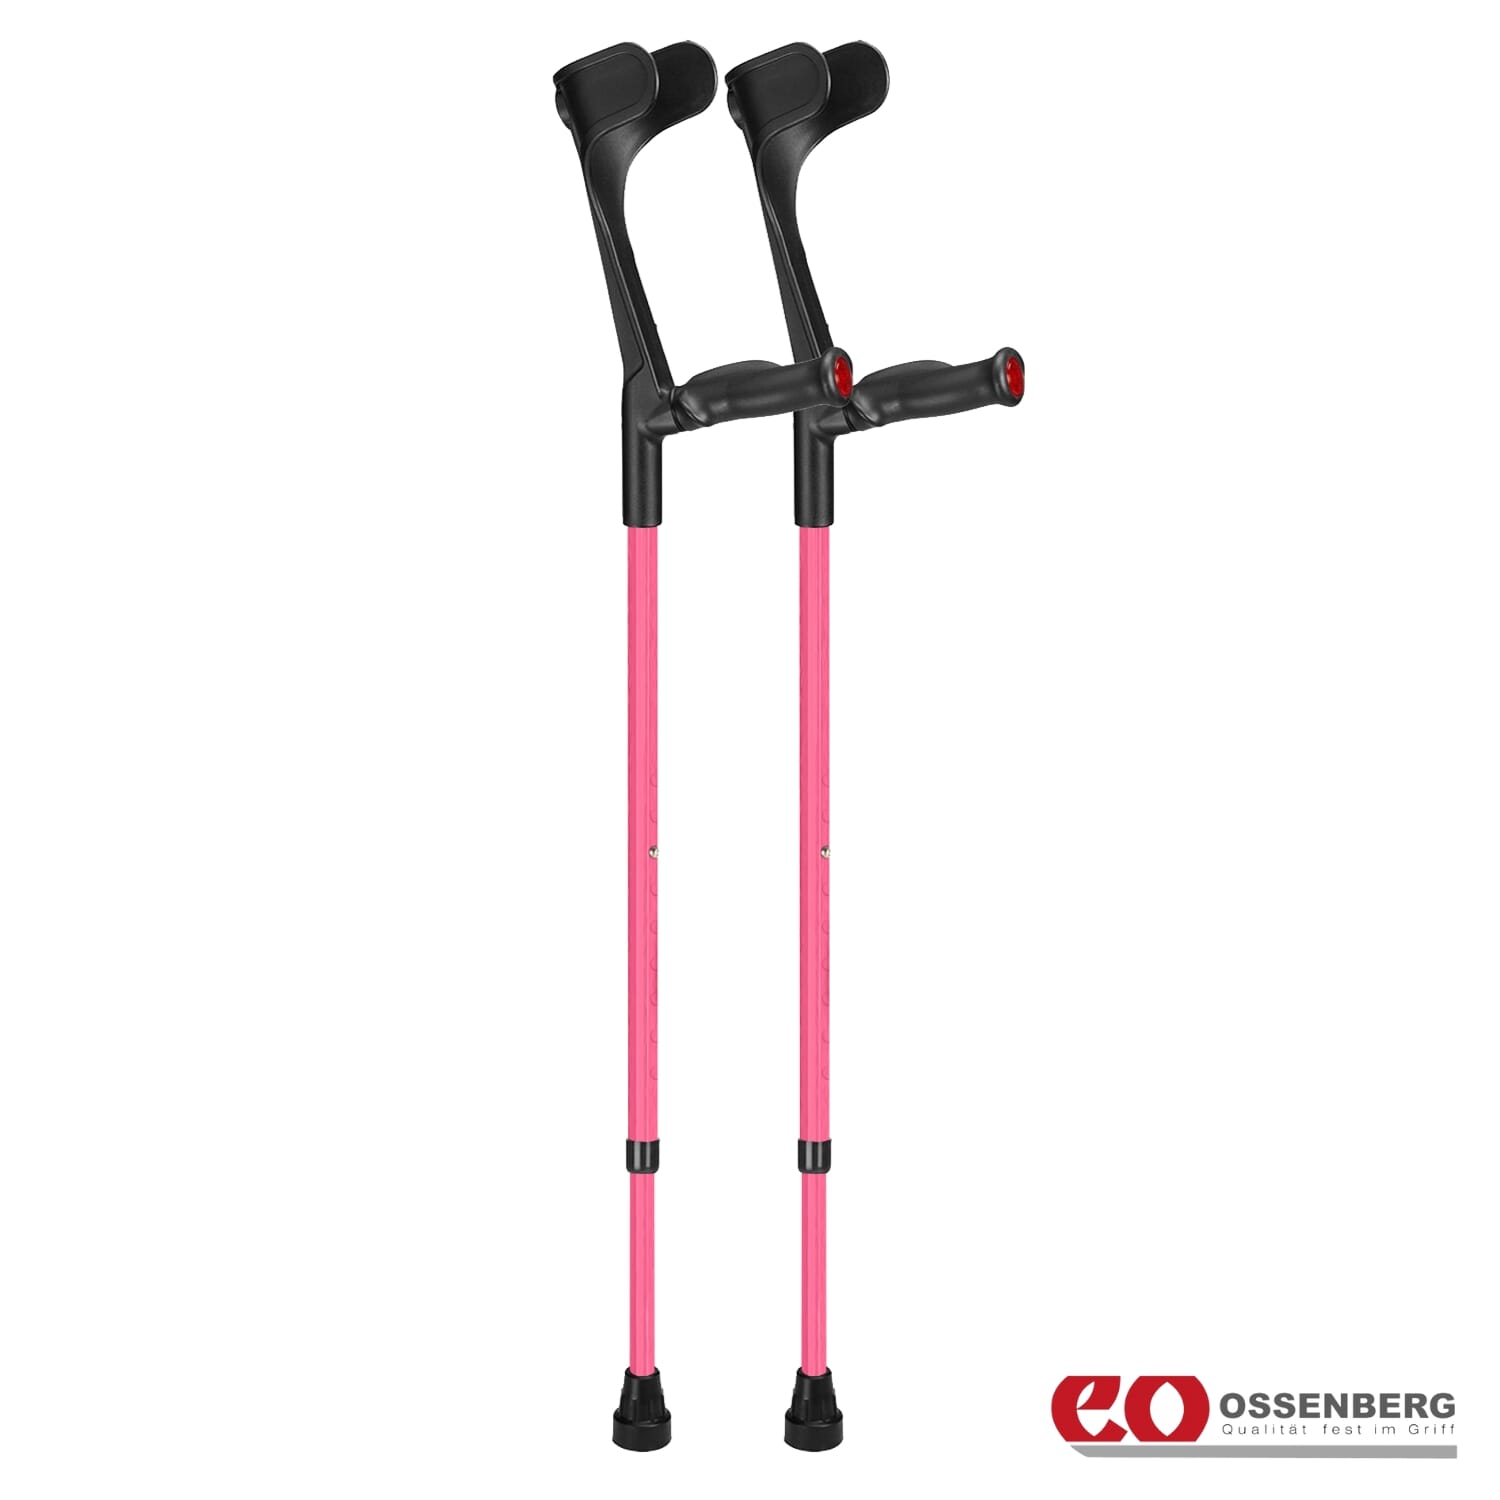 View Ossenberg Open Cuff Comfort Grip Crutches Pink Pair information